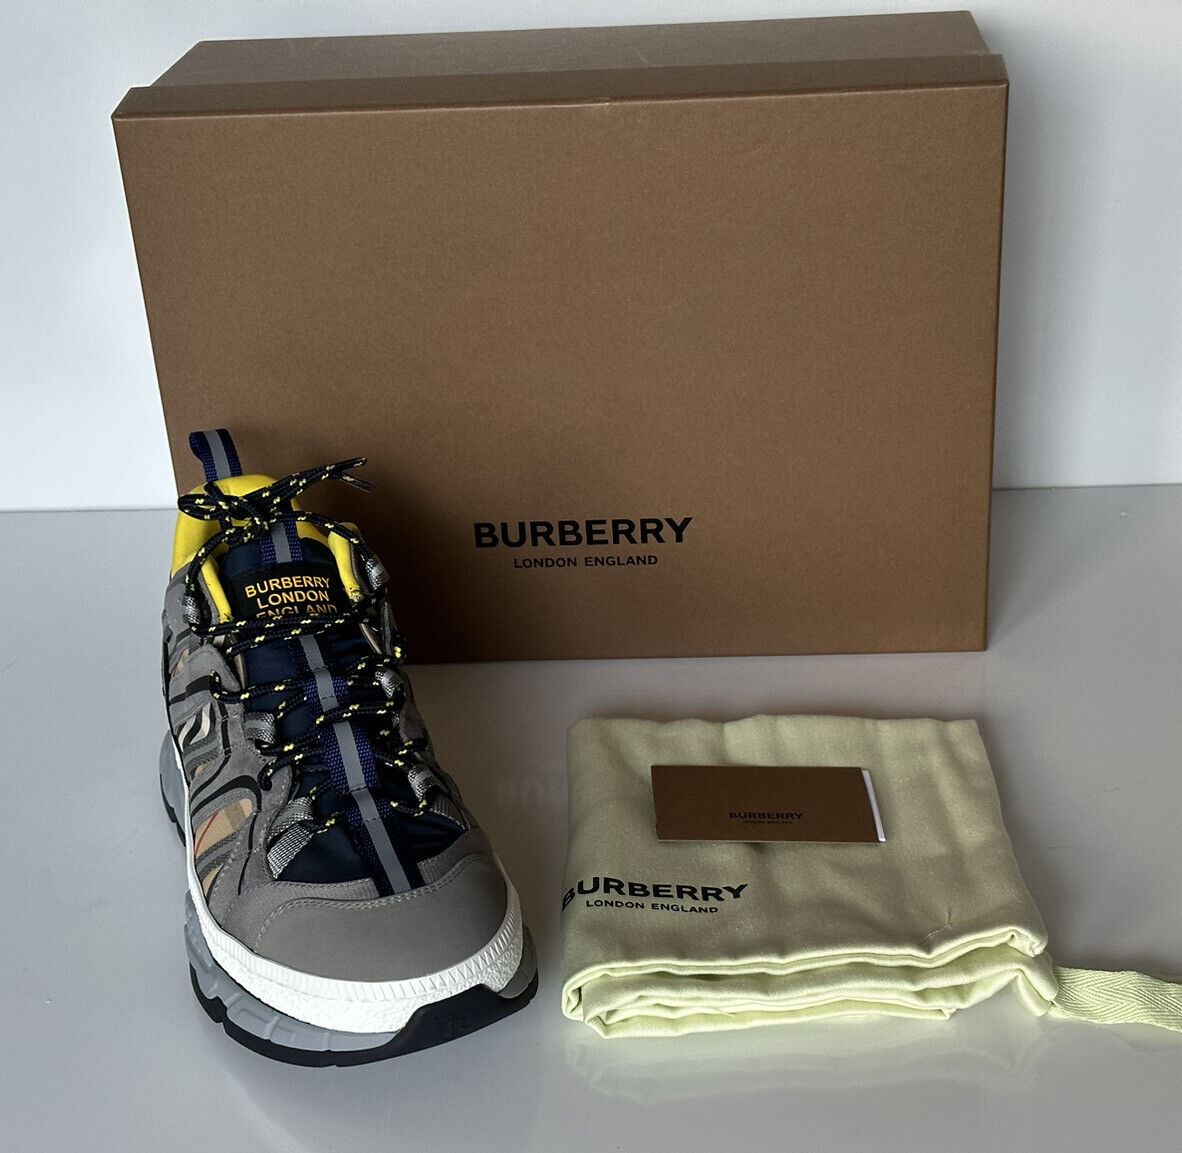 NIB Burberry Herren Union Check Archive Beige Sneakers 9 US (42 Euro) 8053928IT 